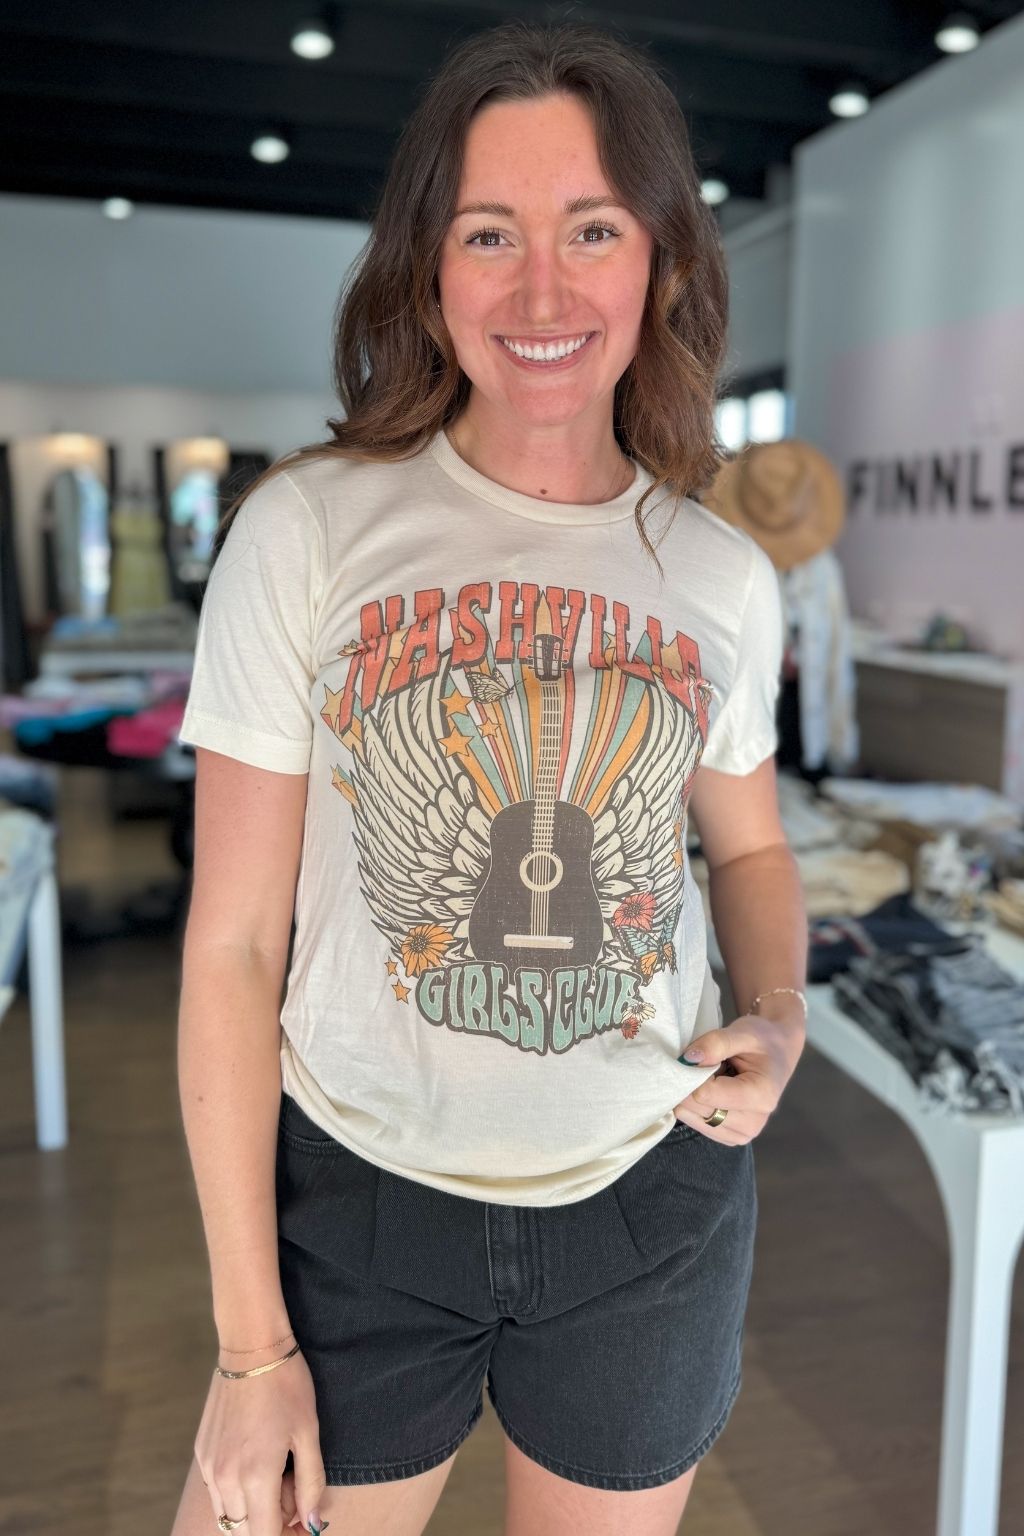 Nashville Girls Club Graphic T-Shirt